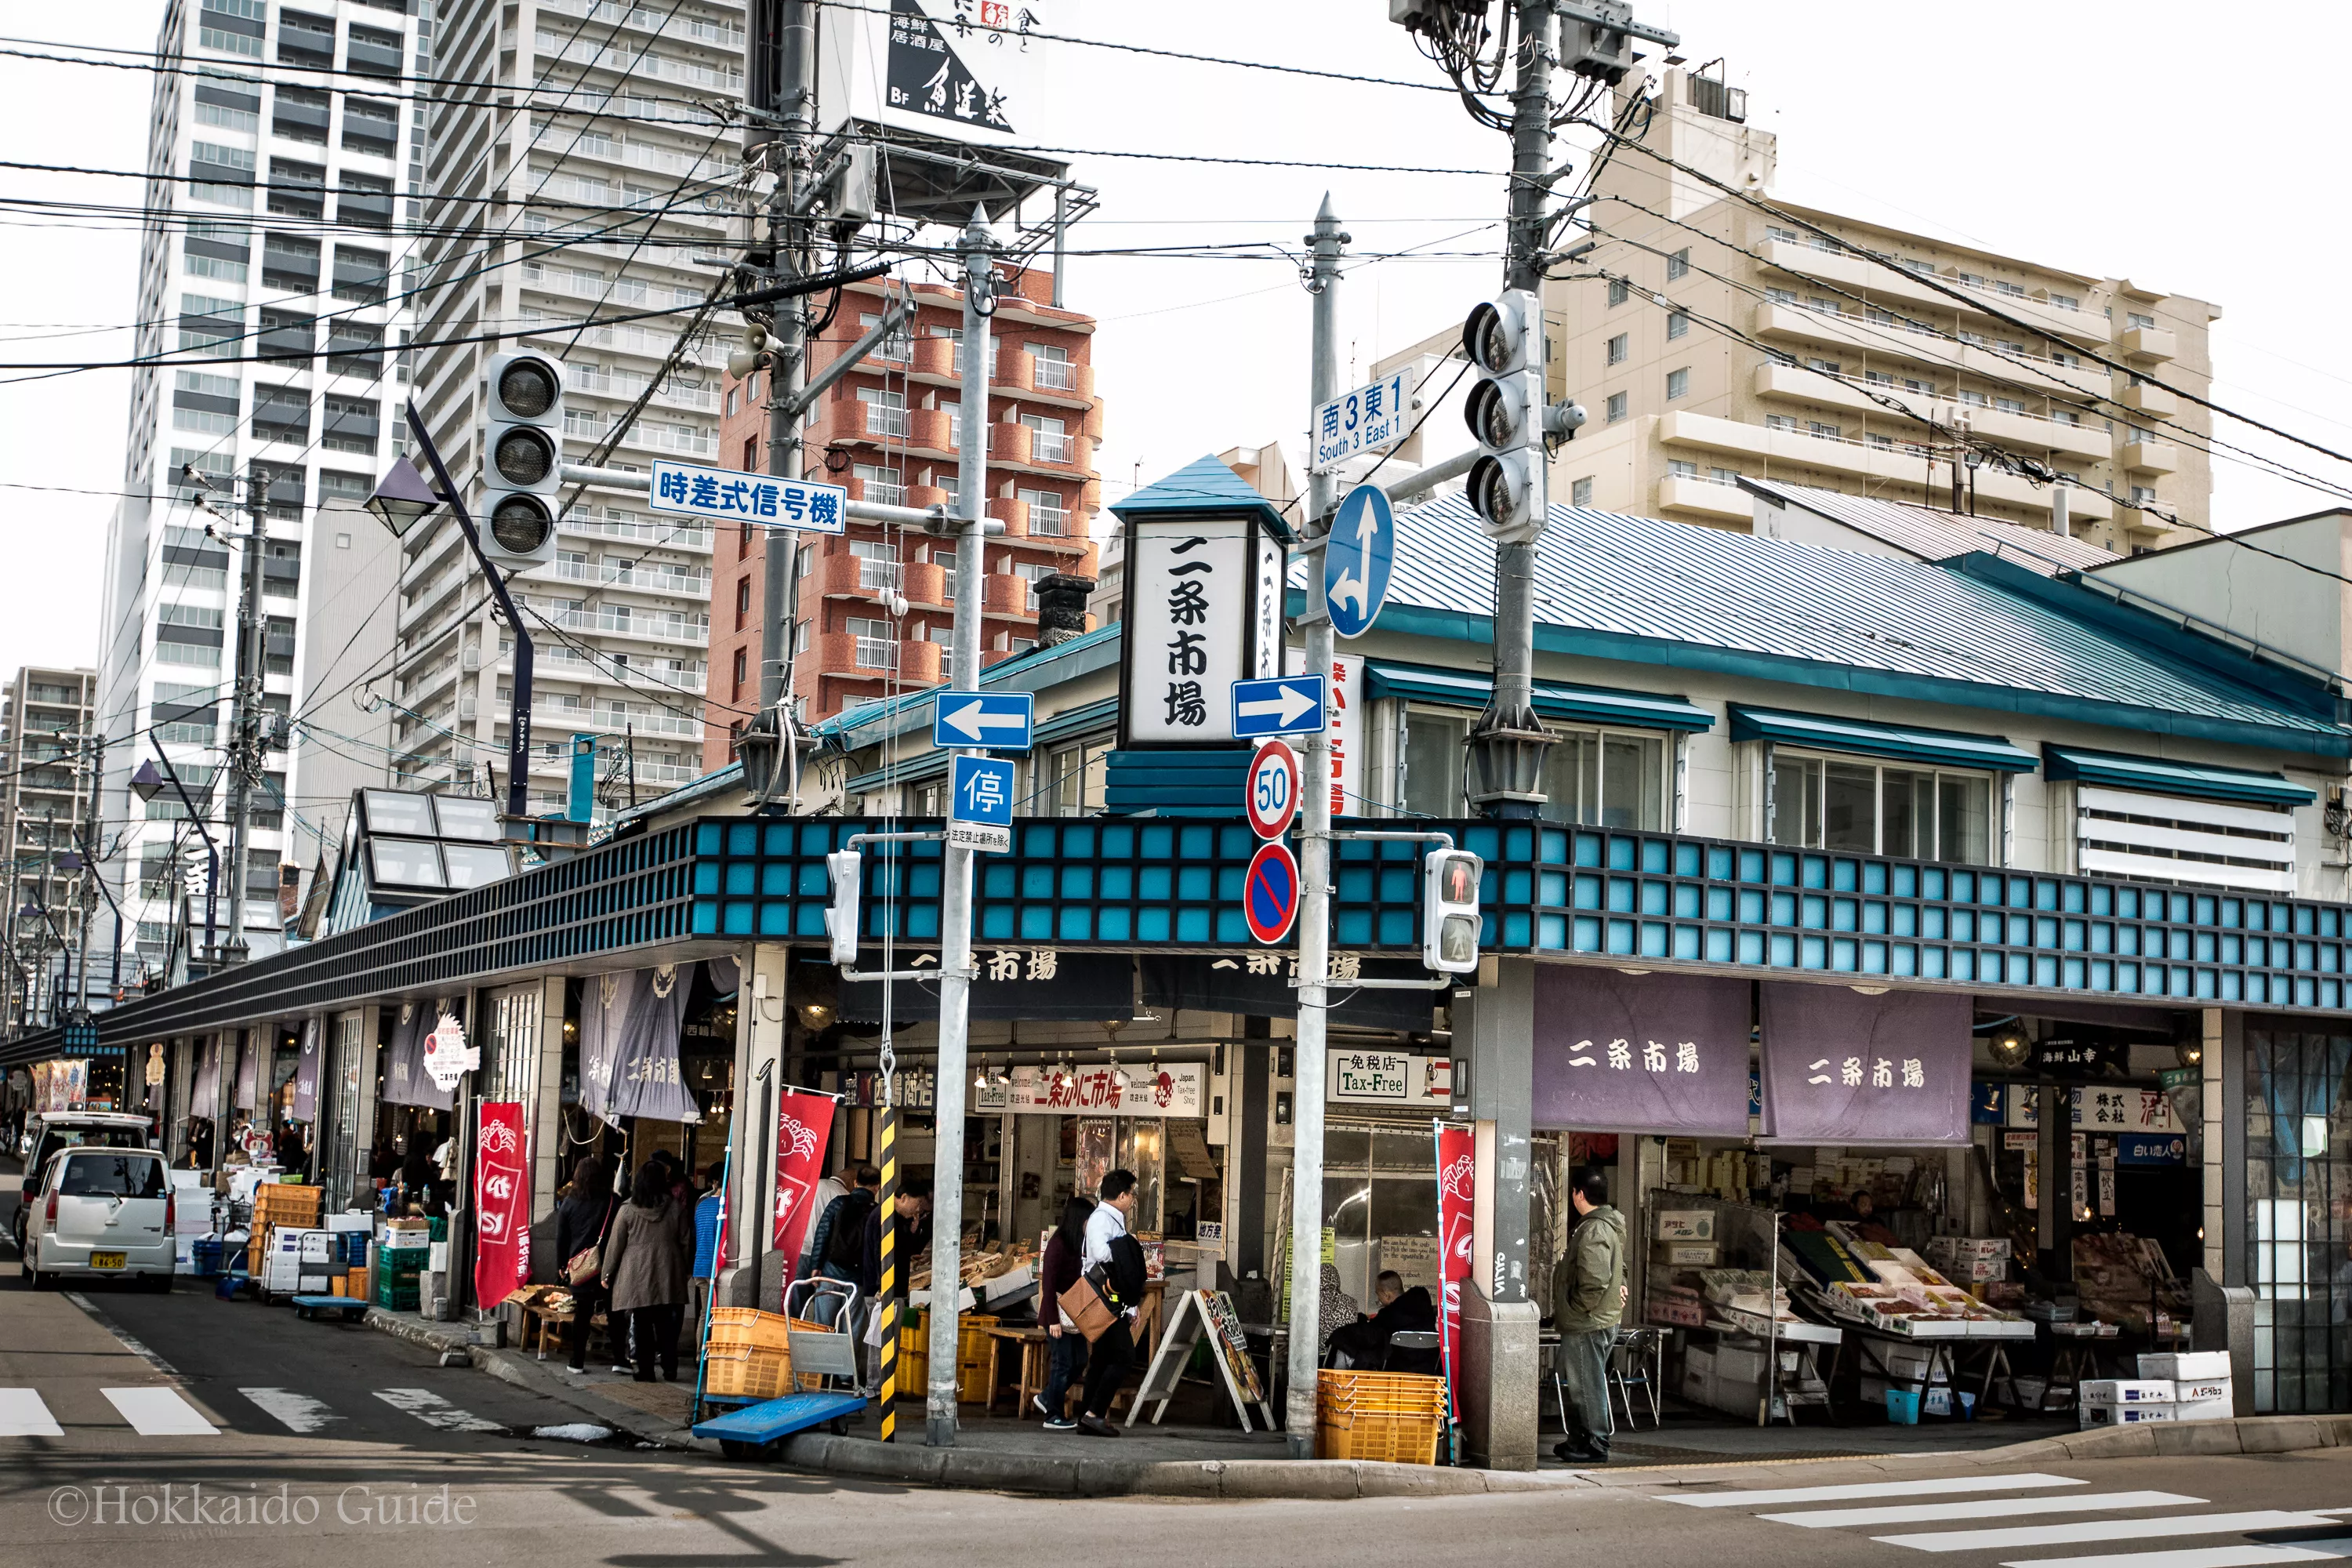 Nijo Market in Japan, East Asia | Street Food - Rated 3.7